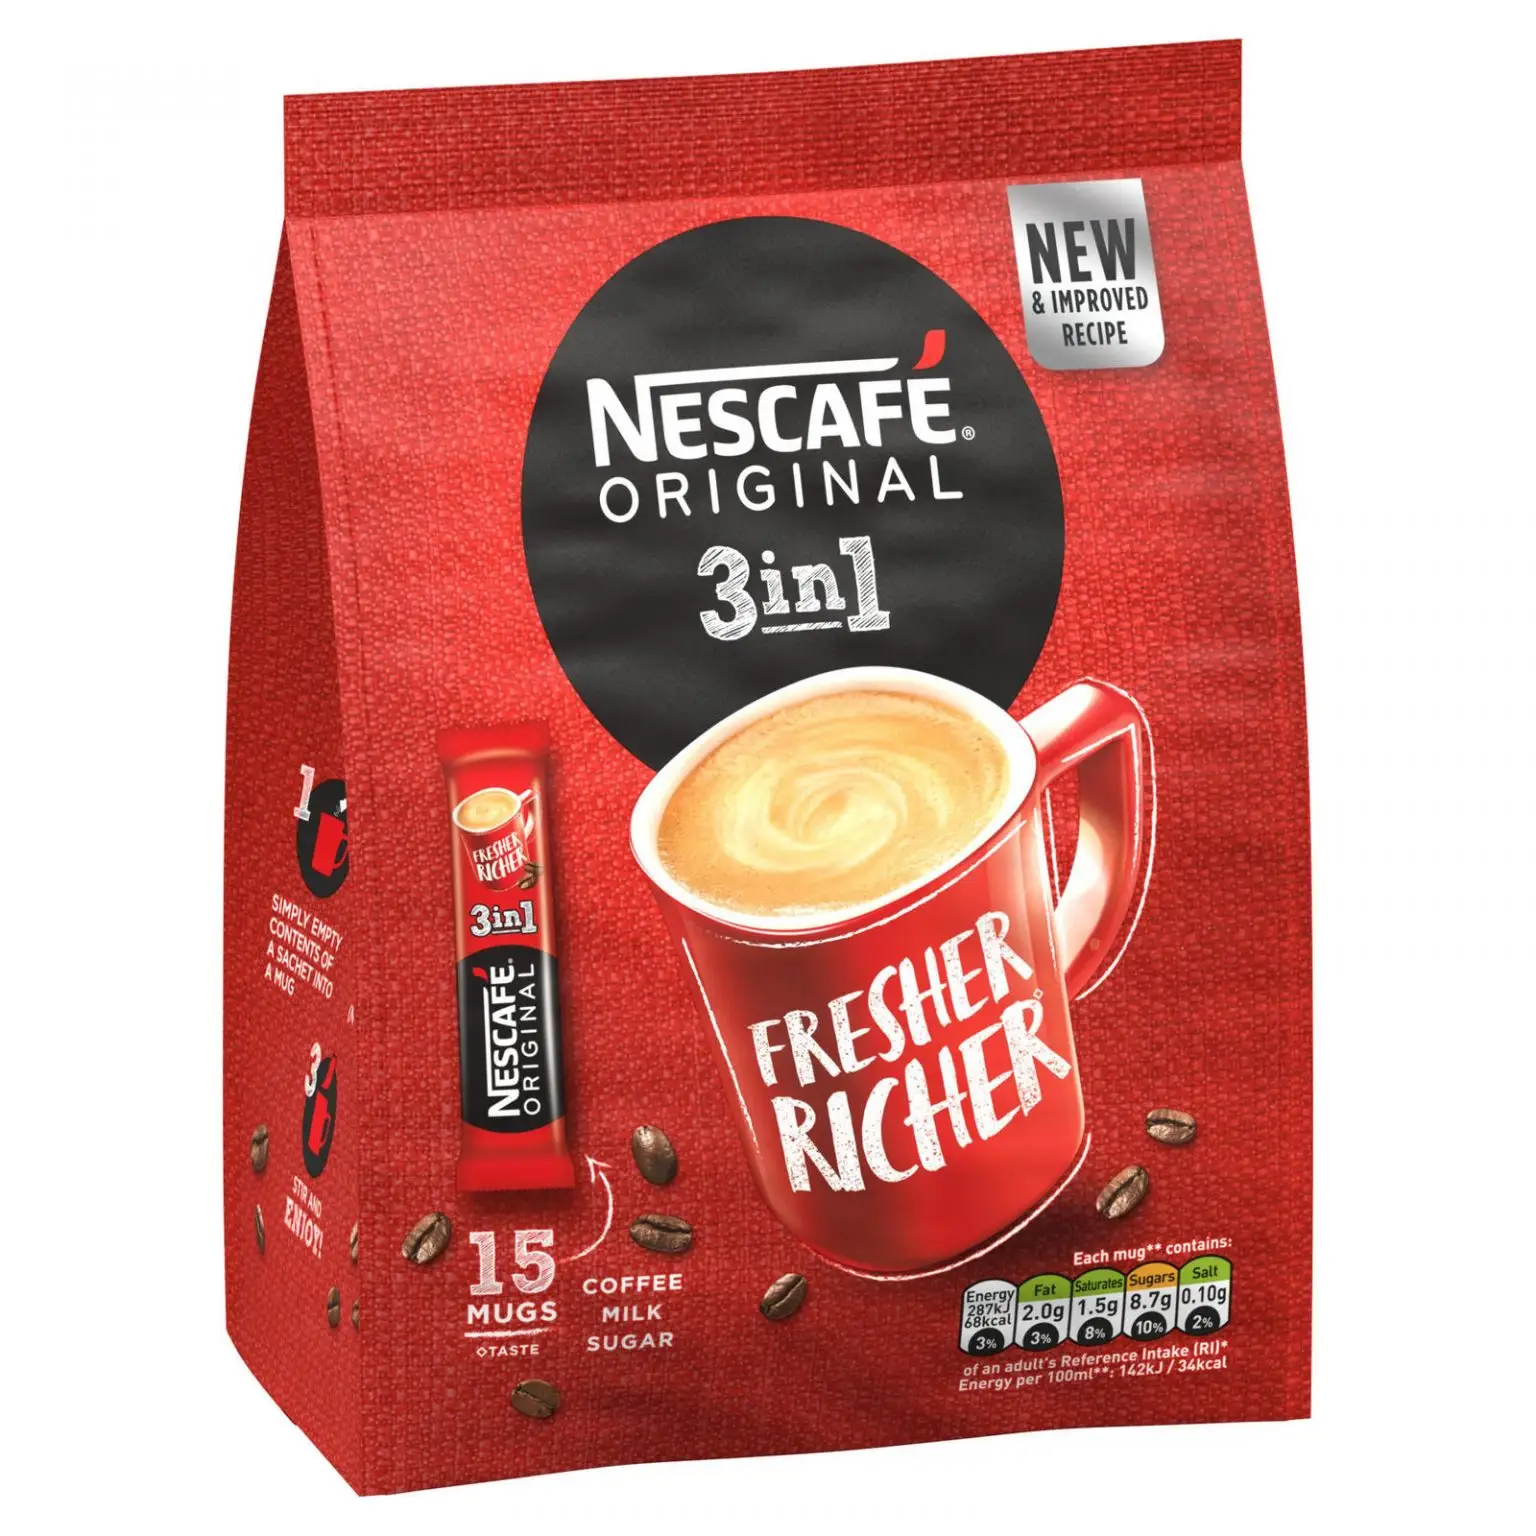 CHEAP PRICE NESCAFE CLASSIC INSTANT COFFEE SUPPLIER